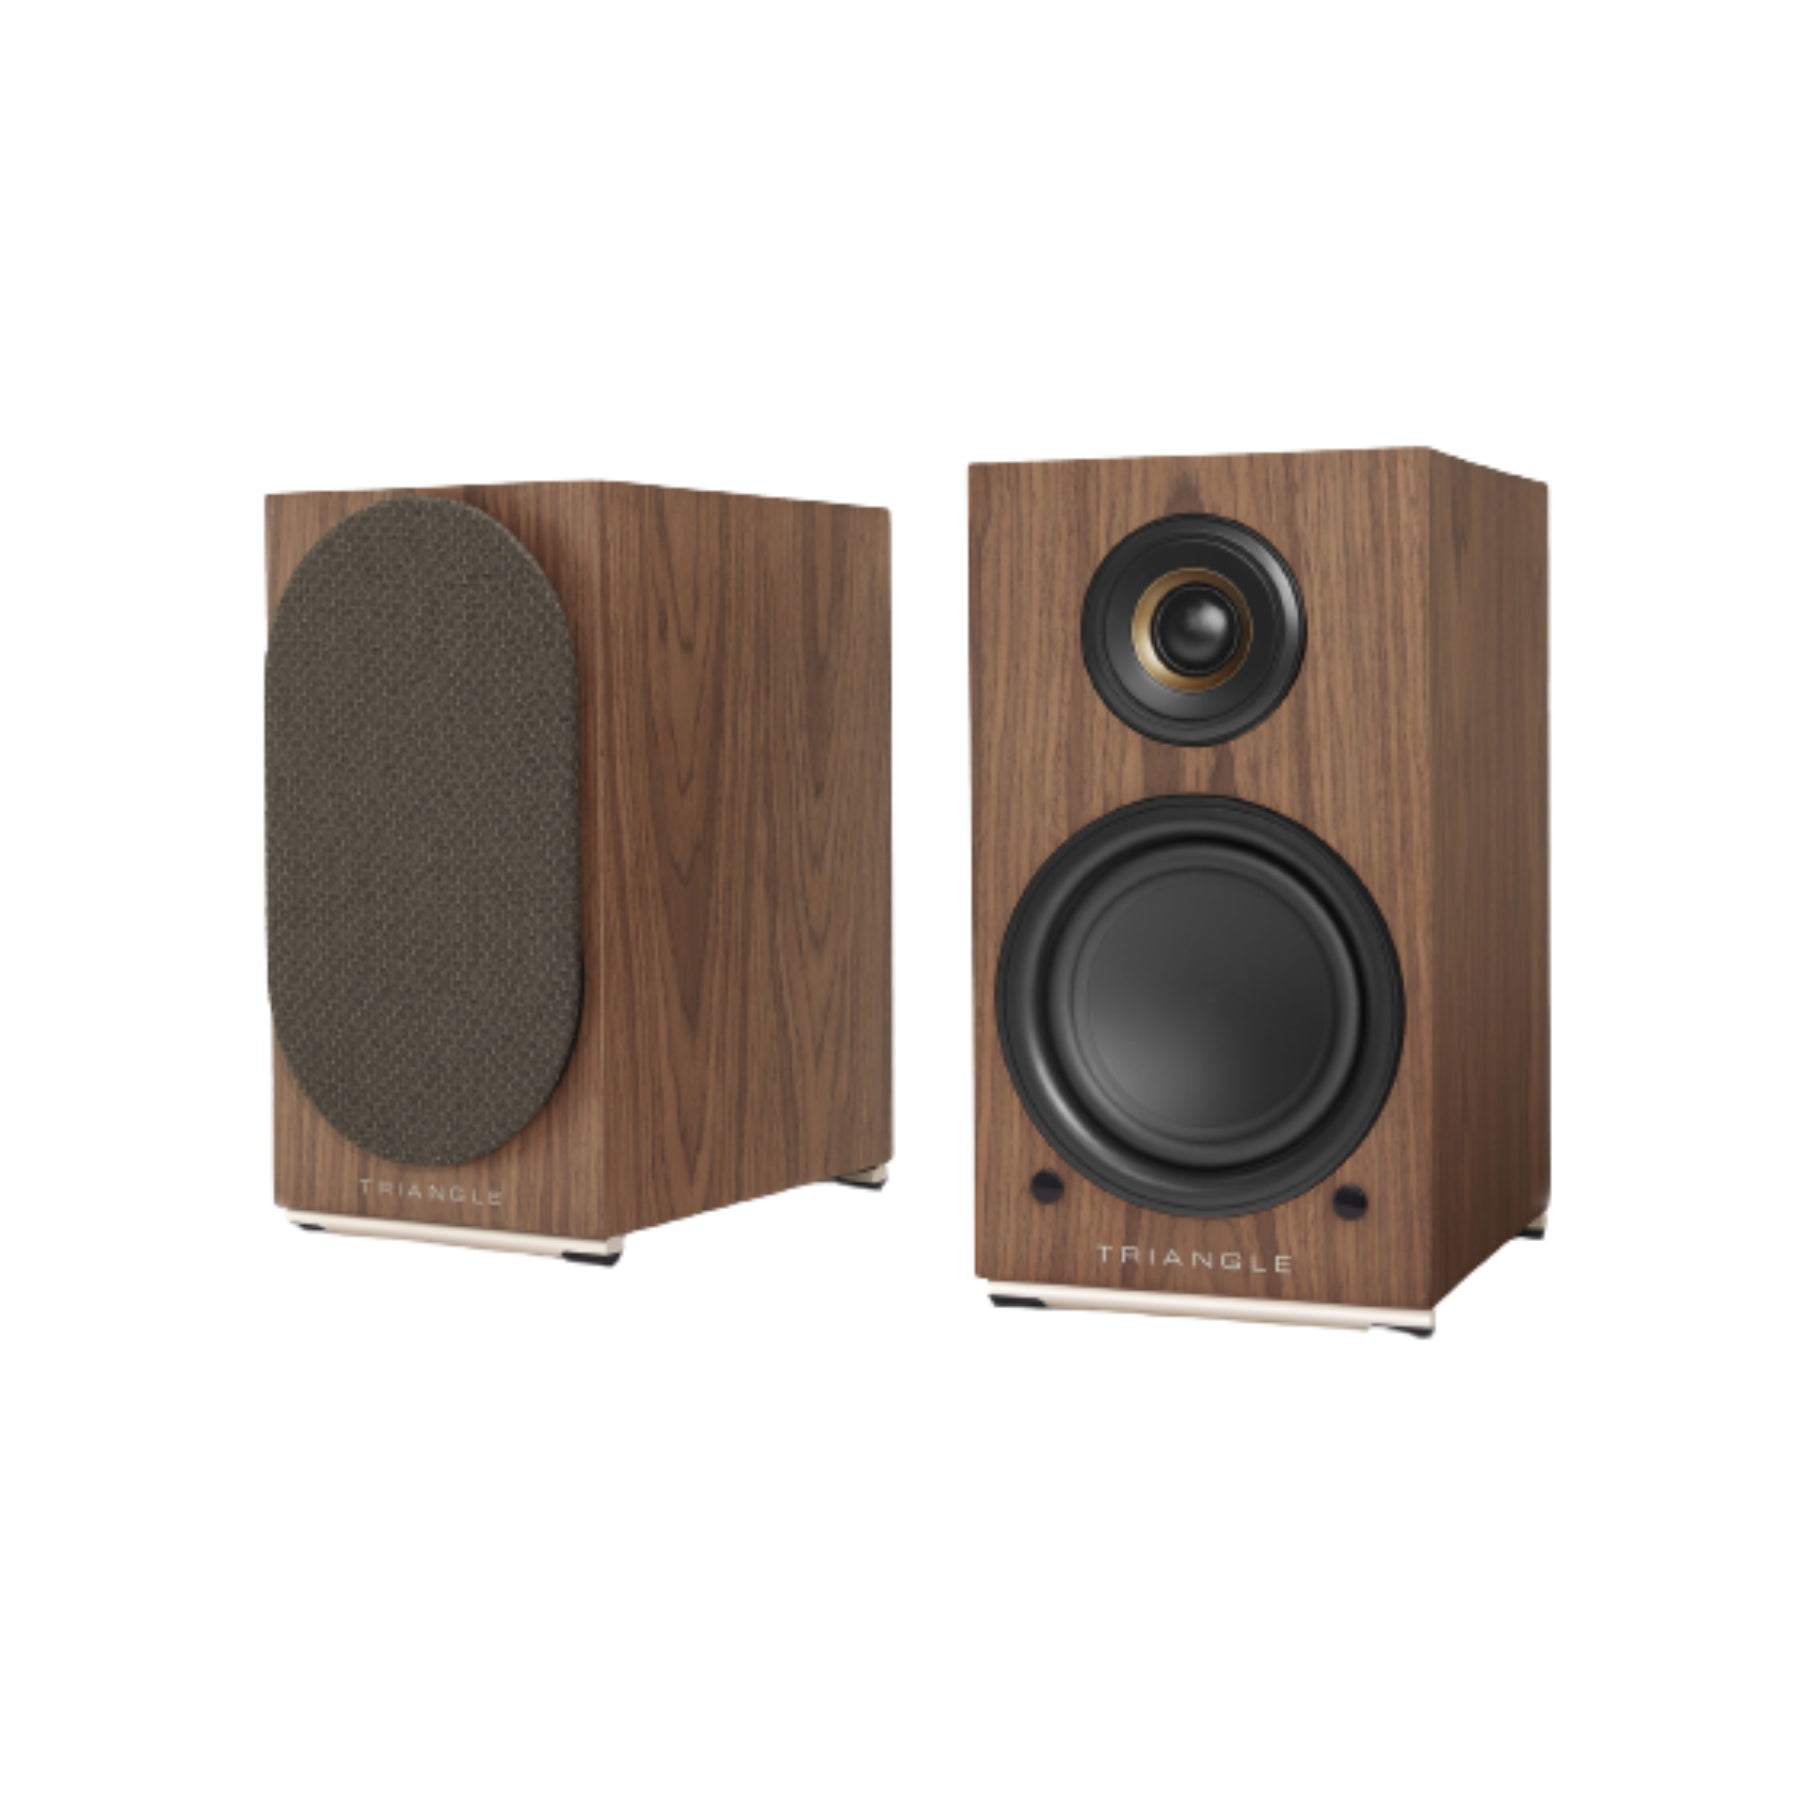 SHOP TRIANGLE AIO 3  High-Resolution Audio Craftsmanship